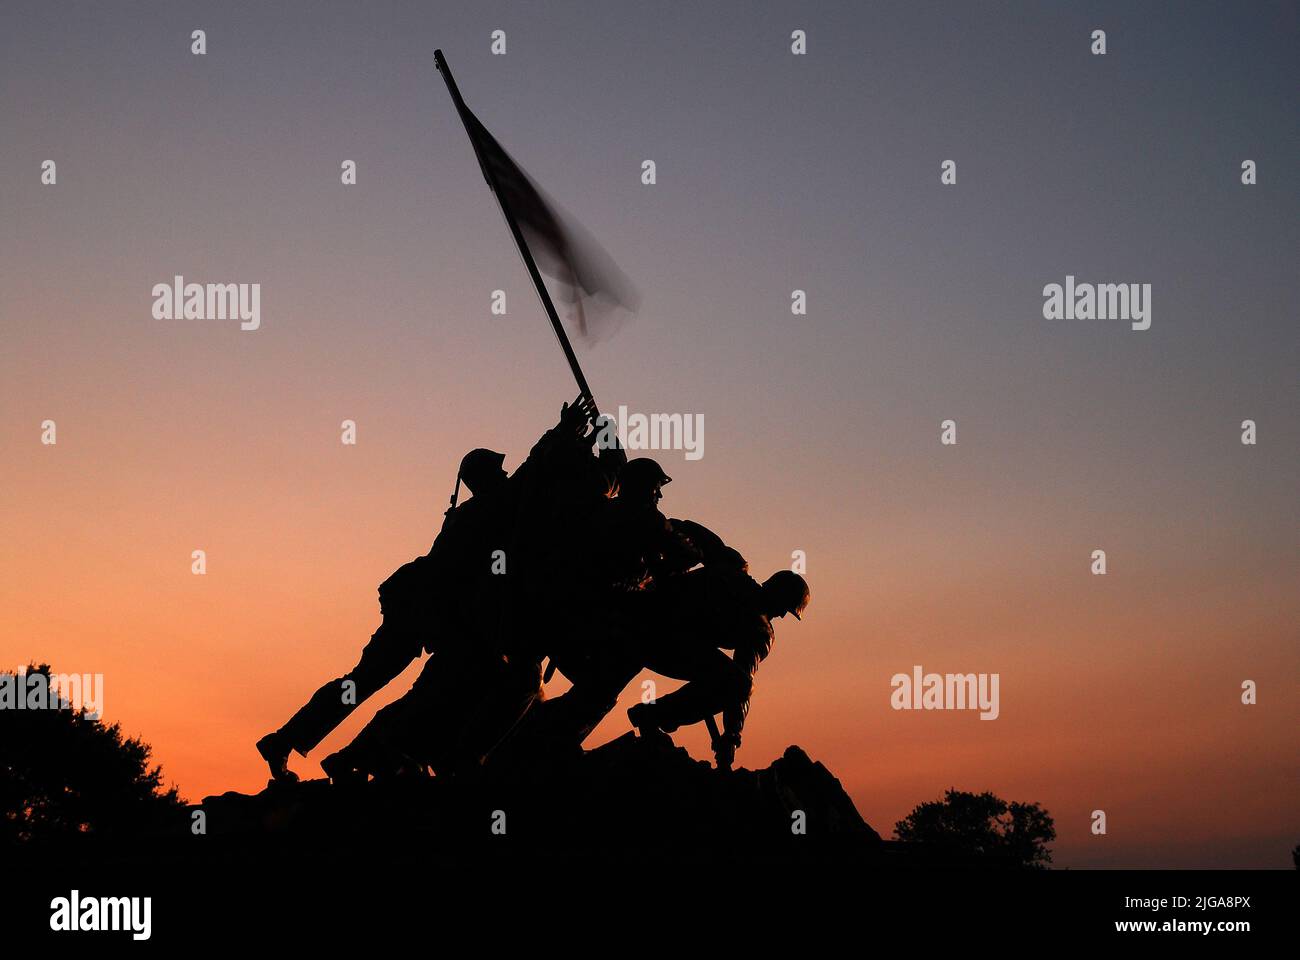 US Marine Corp Memorial, a sculpture in Arlington, Virginia, near Washington, DC shows the rising of the American flag on Iwo Jima during World War II Stock Photo